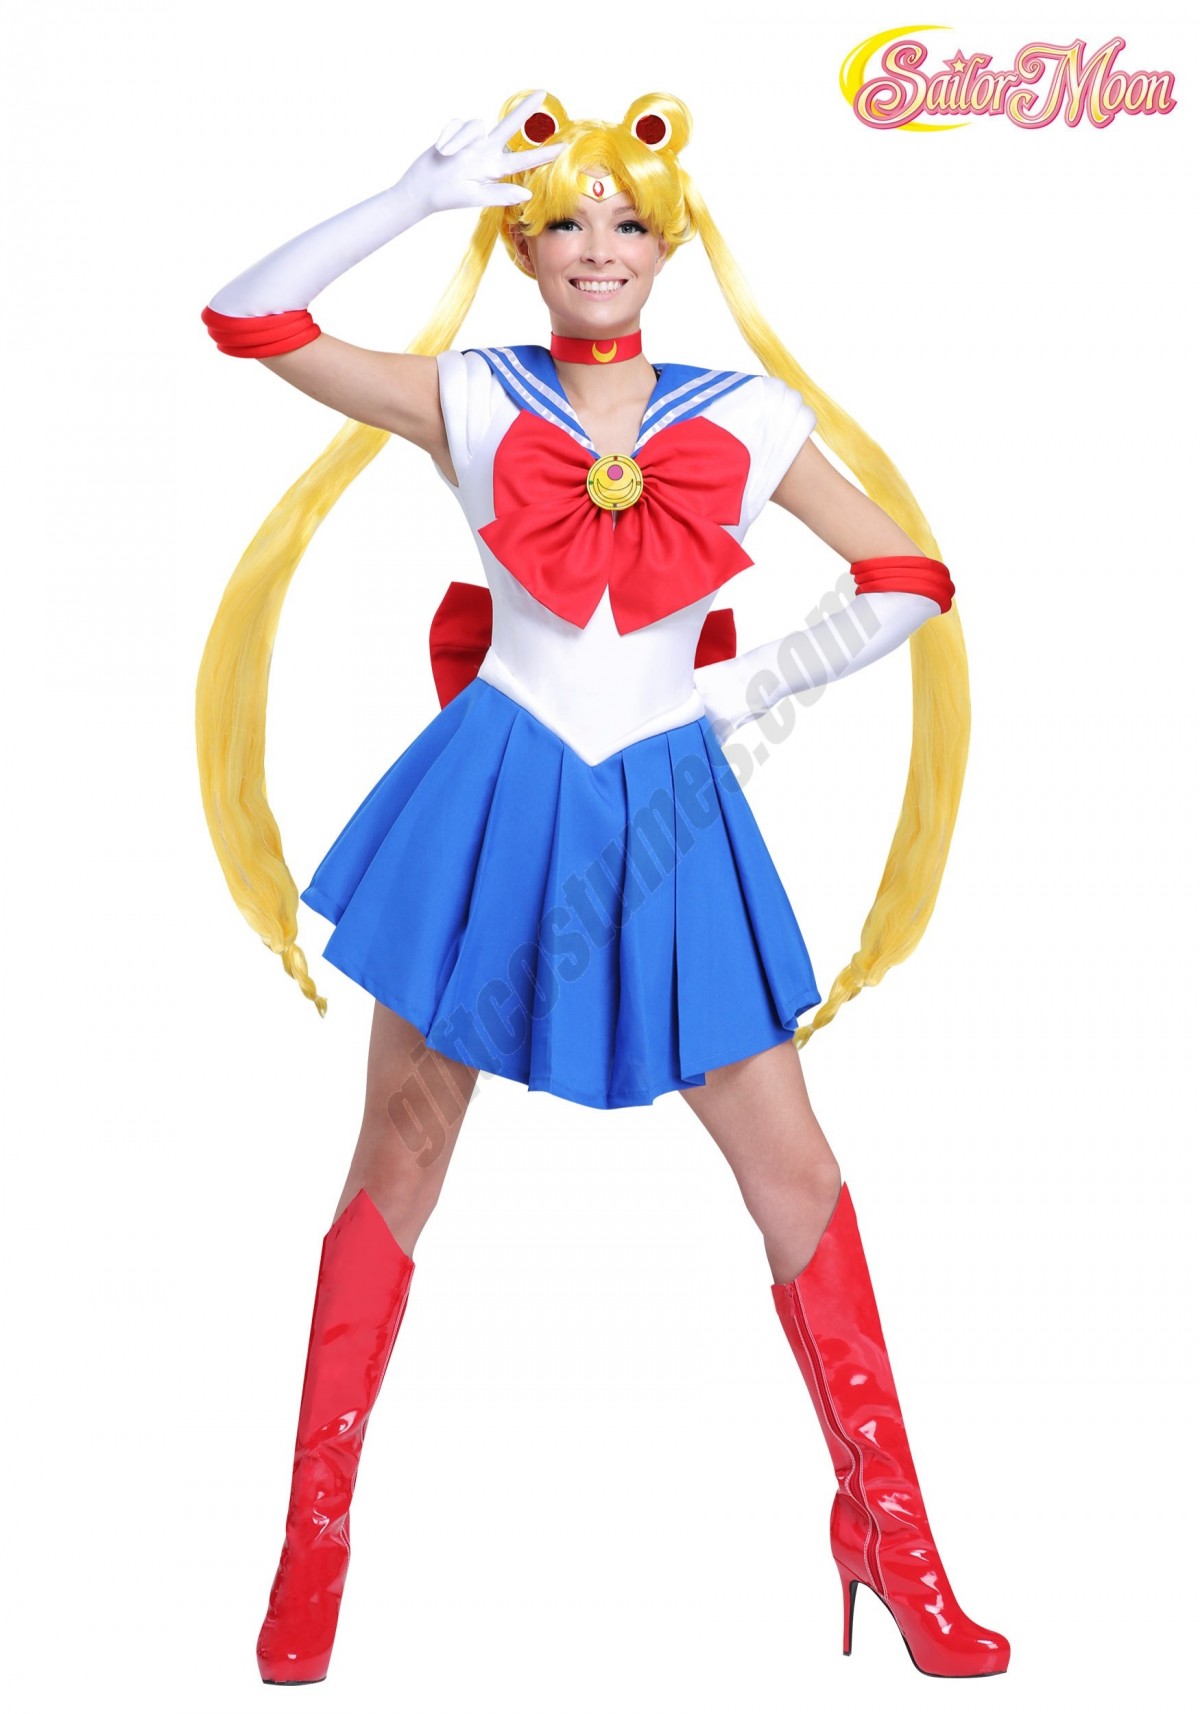 Sailor Moon Women's Costume Promotions - -0